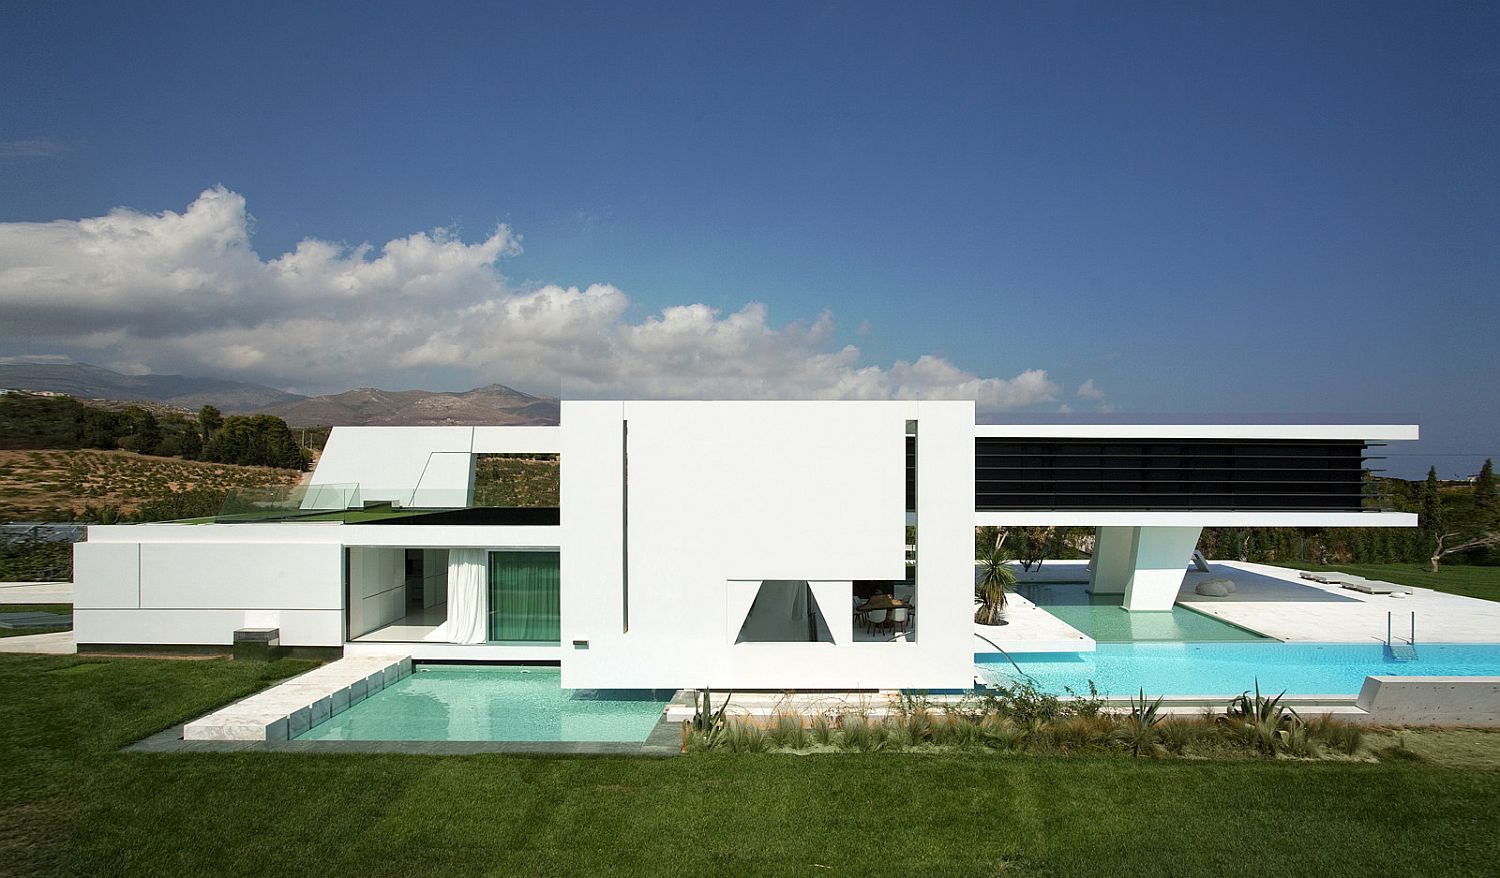 White and dark visual elements give the home a sleek, minimal vibe